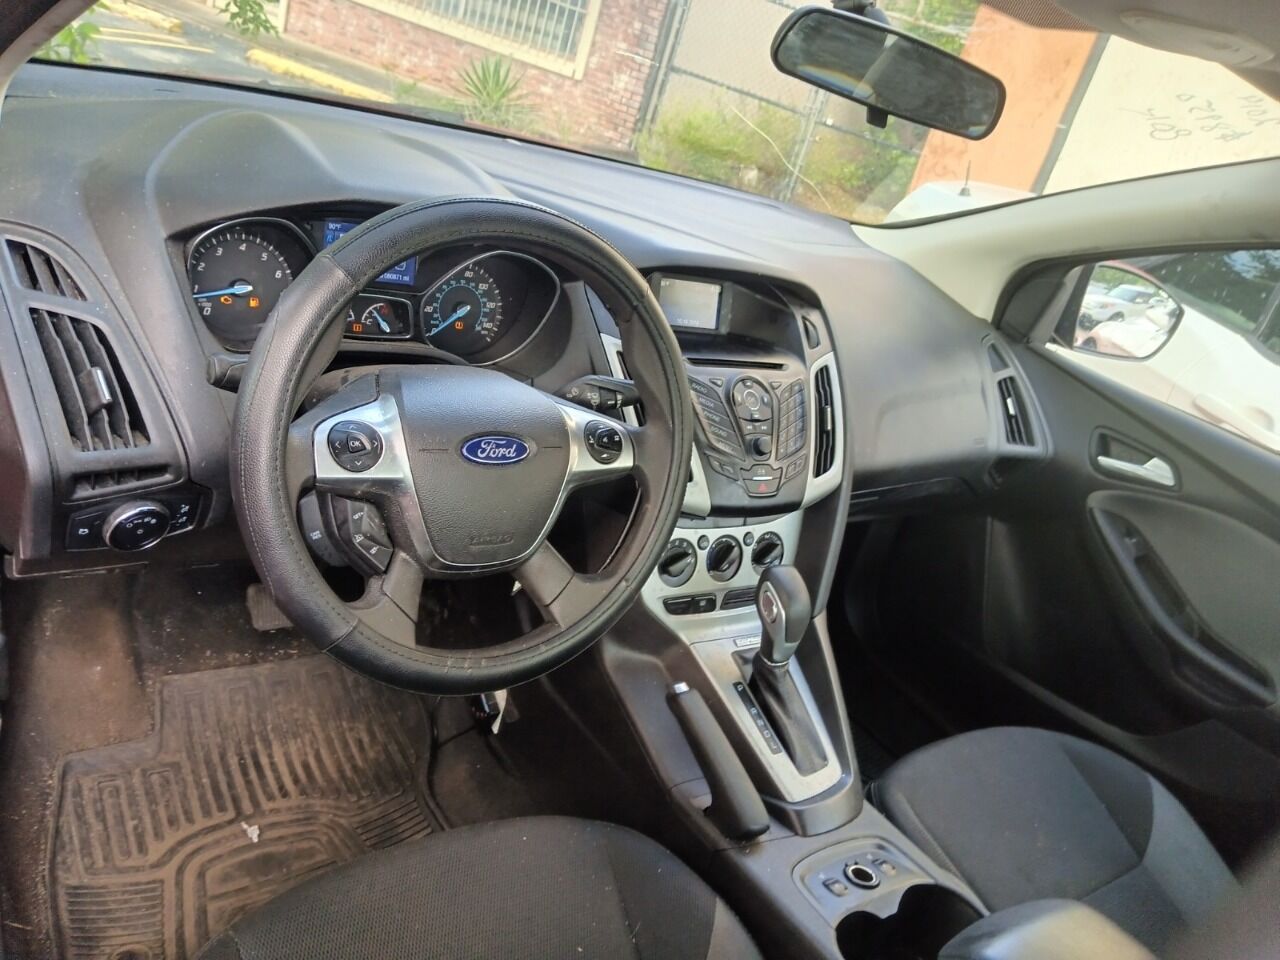 2014 Ford Focus Sedan - $6,950